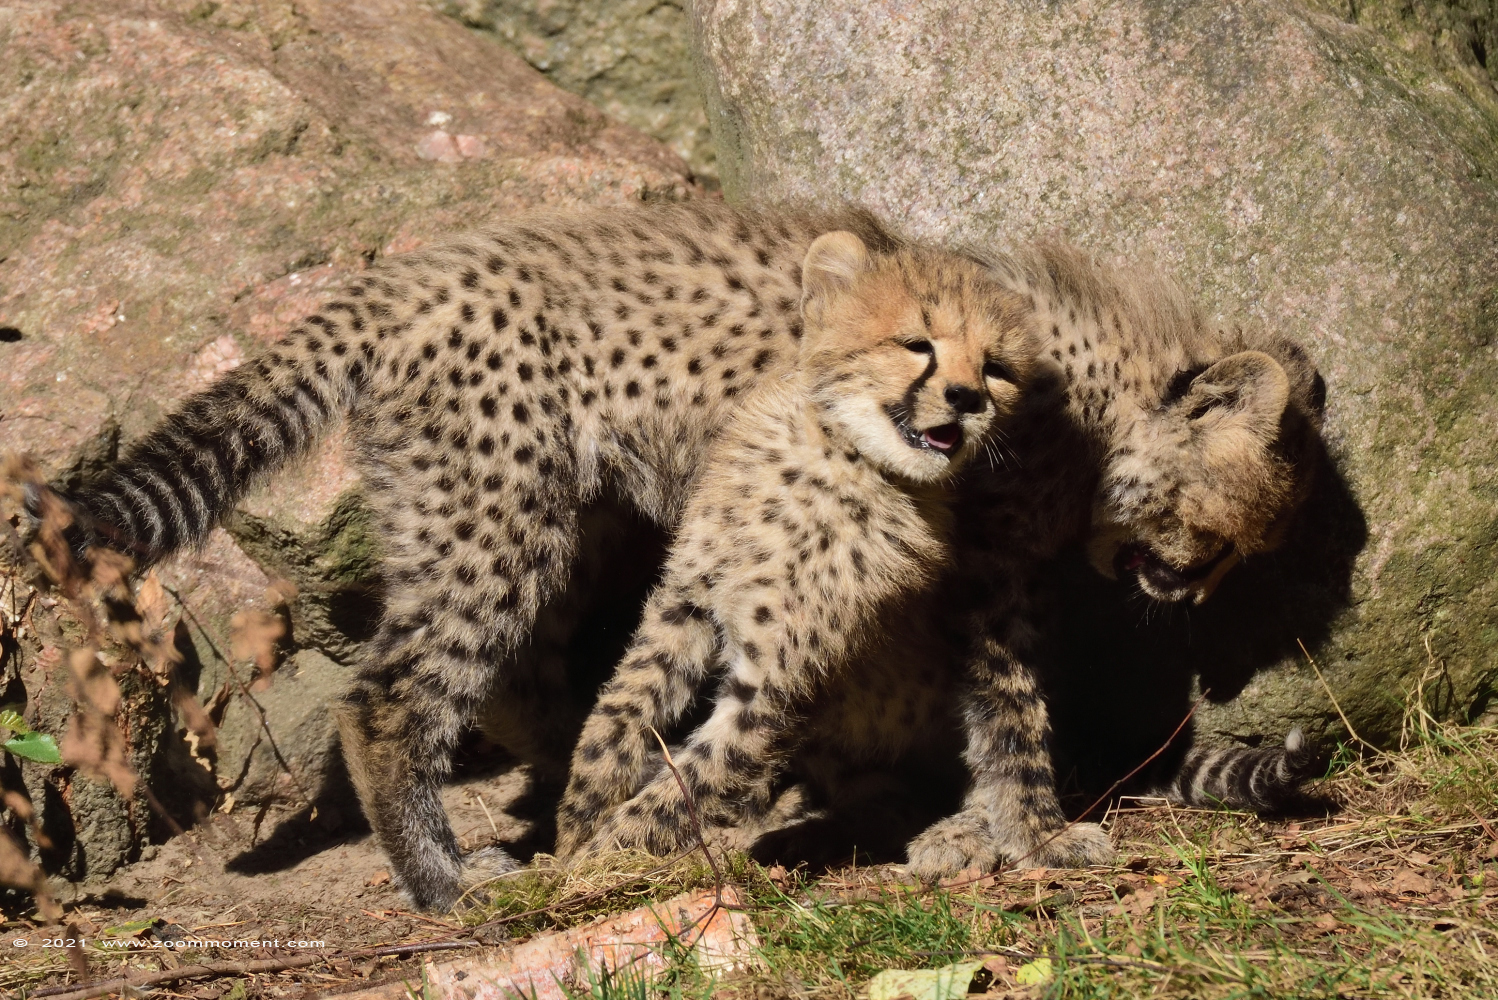 jachtluipaard ( Acinonyx jubatus ) cheetah
Welpen, geboren augustus 2021, op de foto ongeveer 5 weken oud
Cubs, born august 2021, on the picture about 5 weeks old
Trefwoorden: Safaripark Beekse Bergen jachtluipaard Acinonyx jubatus cheetah